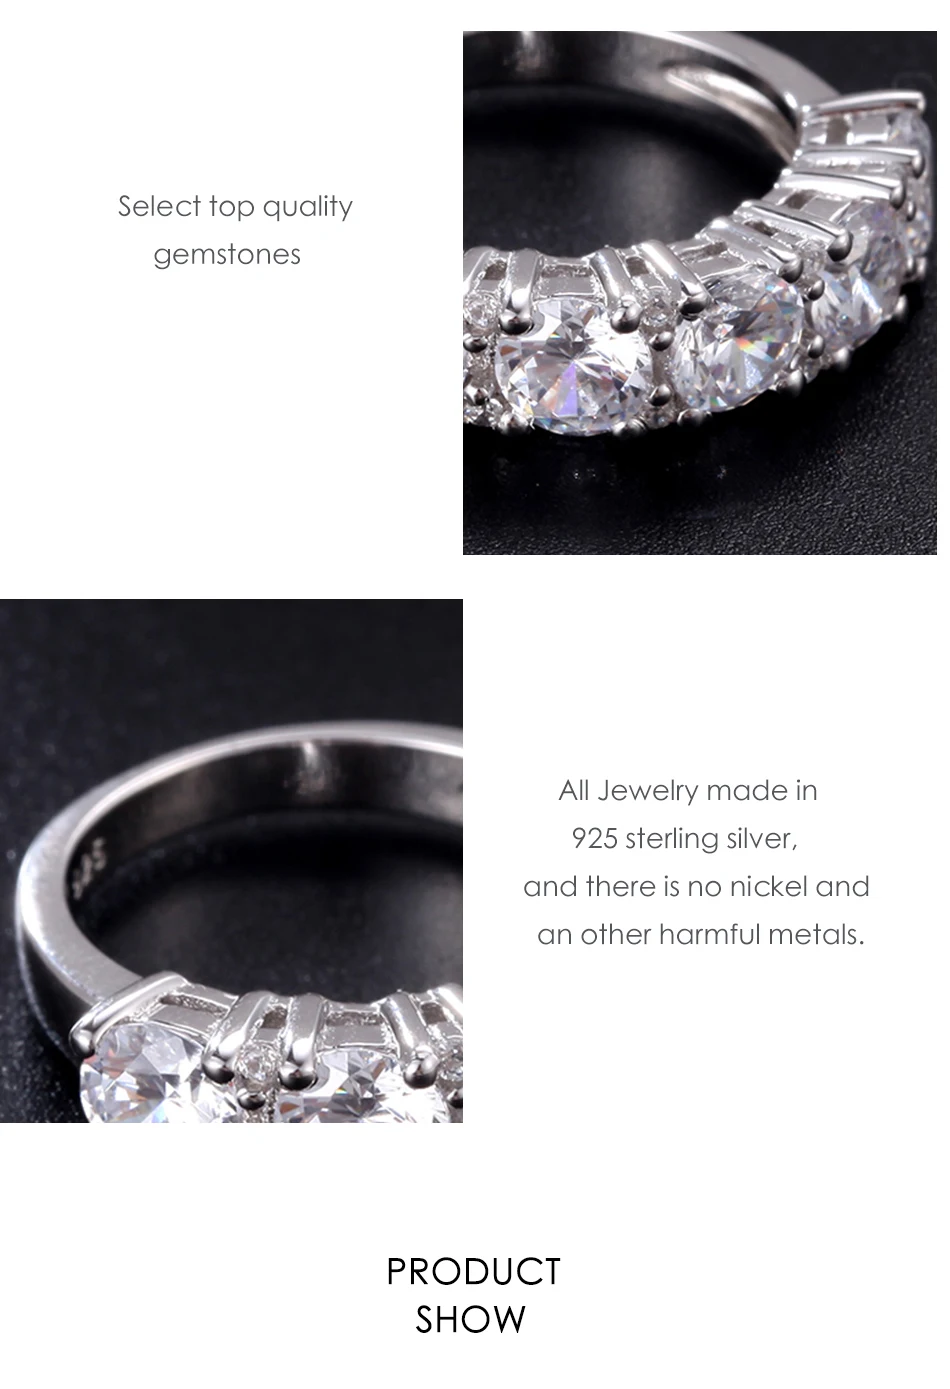 GEM'S BALLLET 925 Sterling Silver Anniversary Wedding Band Ring For Women Natural Tourmaline Gemstone Channel Ring Fine Jewelry RicaFeliz • 2022